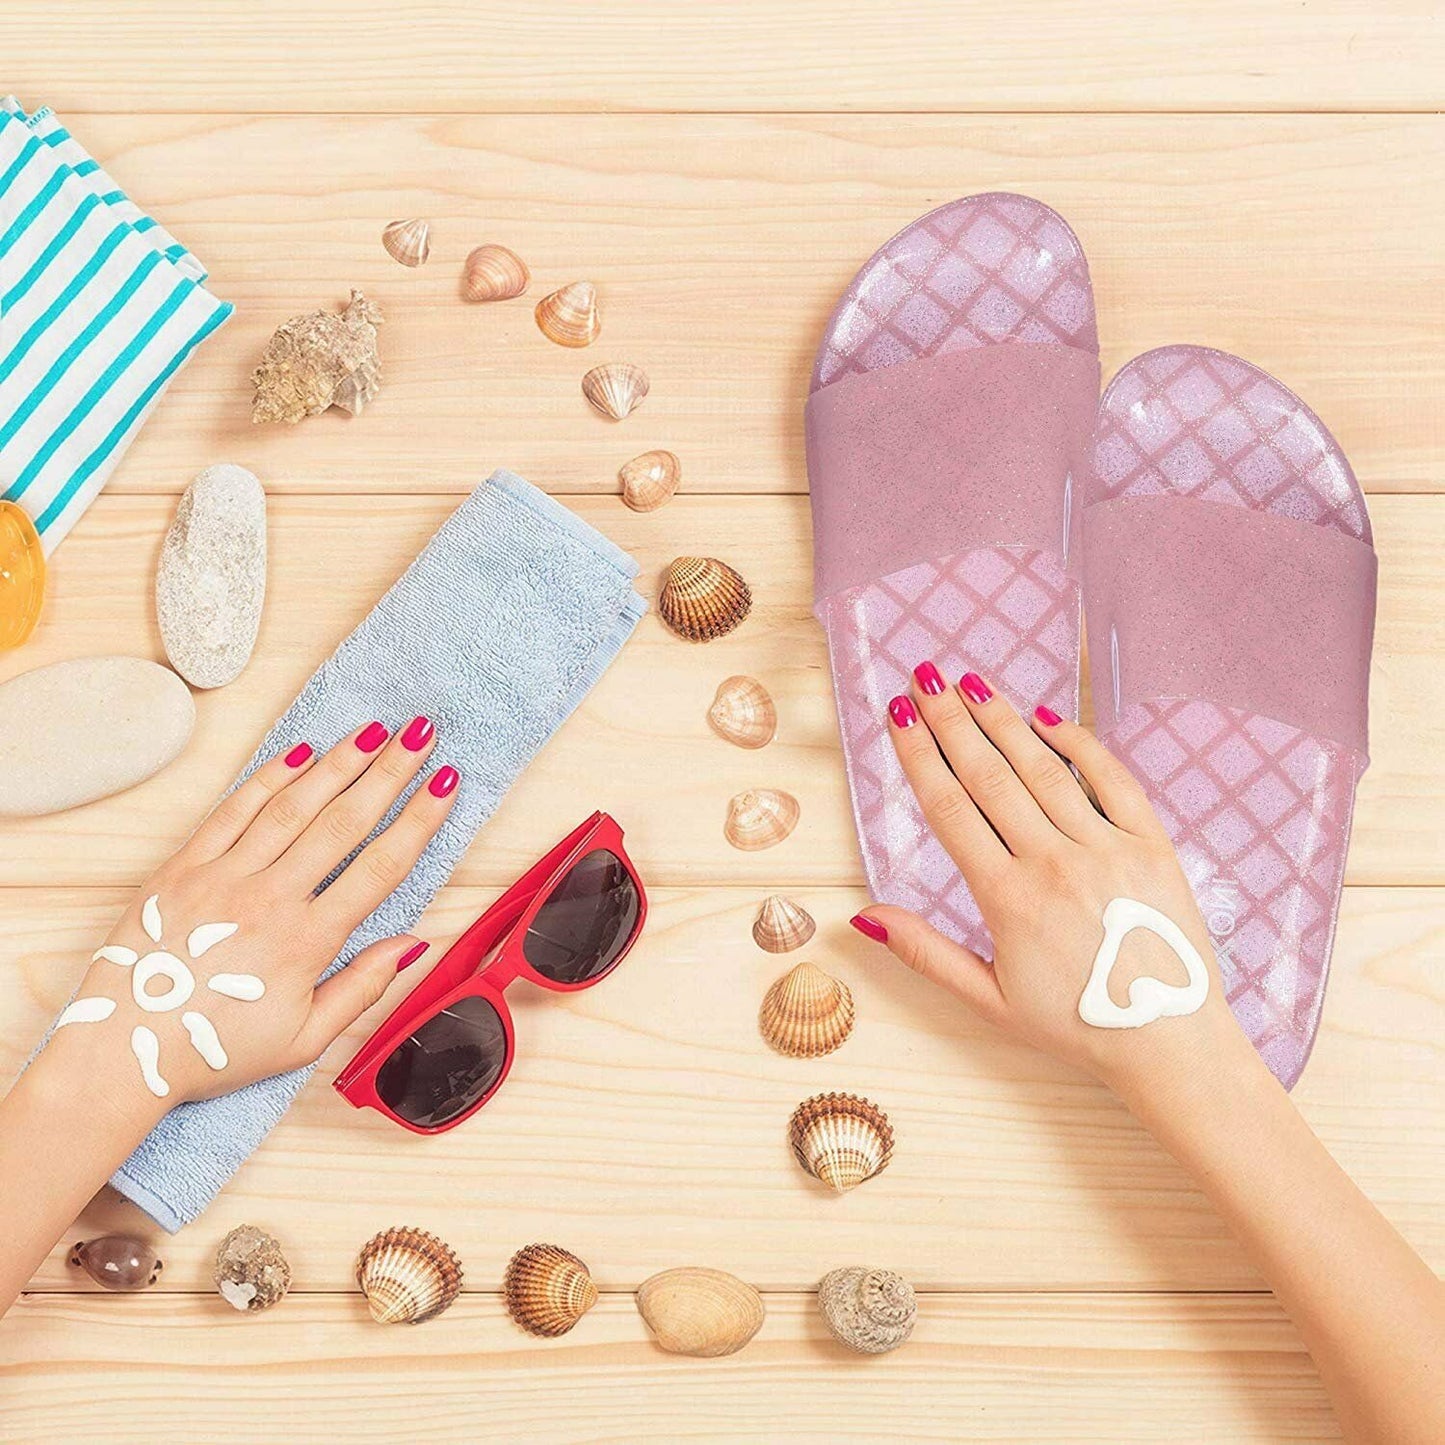 Roxoni Women's Summer Flip Flop Open Toe Jelly Glitter Slide Sandal Slippers